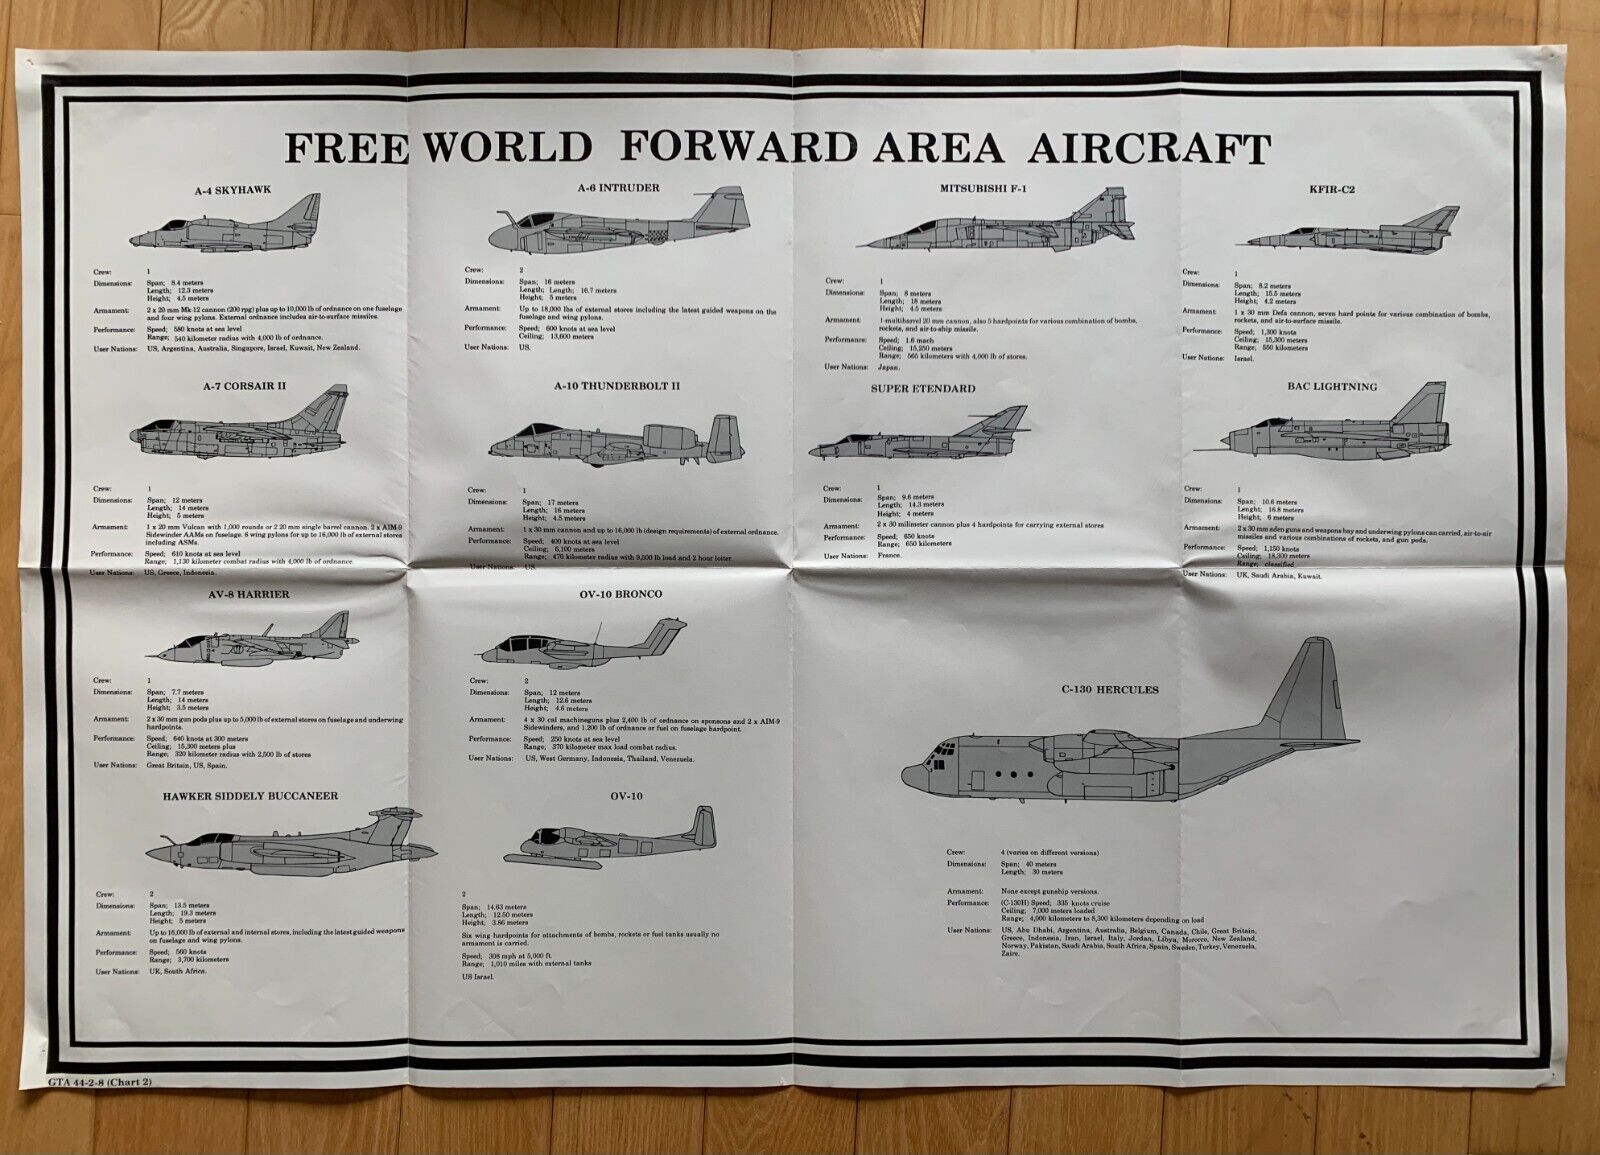 1979 Cold War US Free World Forward Military Aircraft Posters